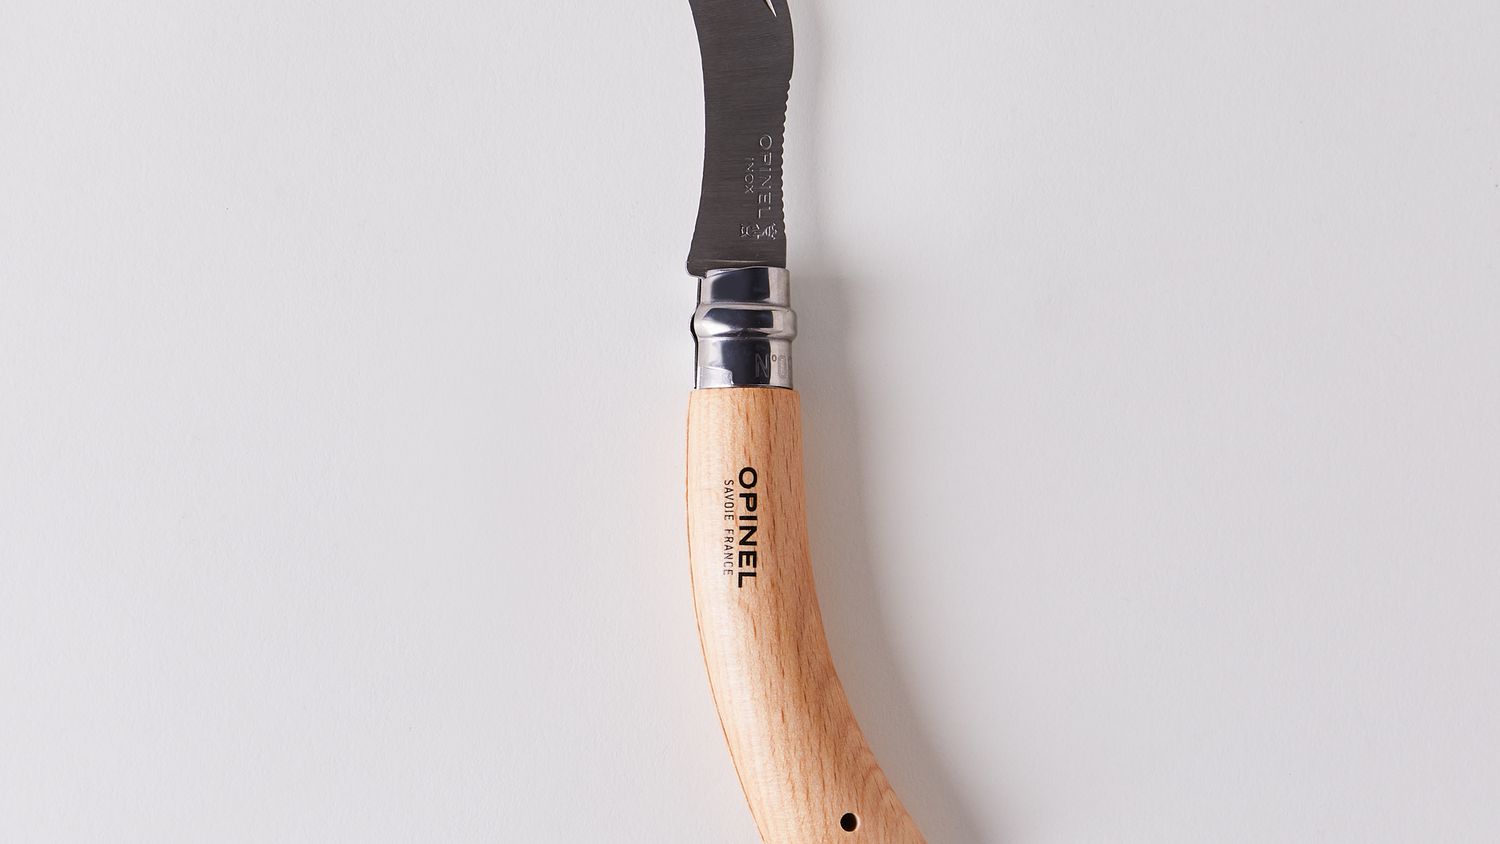 Opinel Wooden Handle Steak Knives, Stainless Steel, 4 Wood Handle Options  on Food52